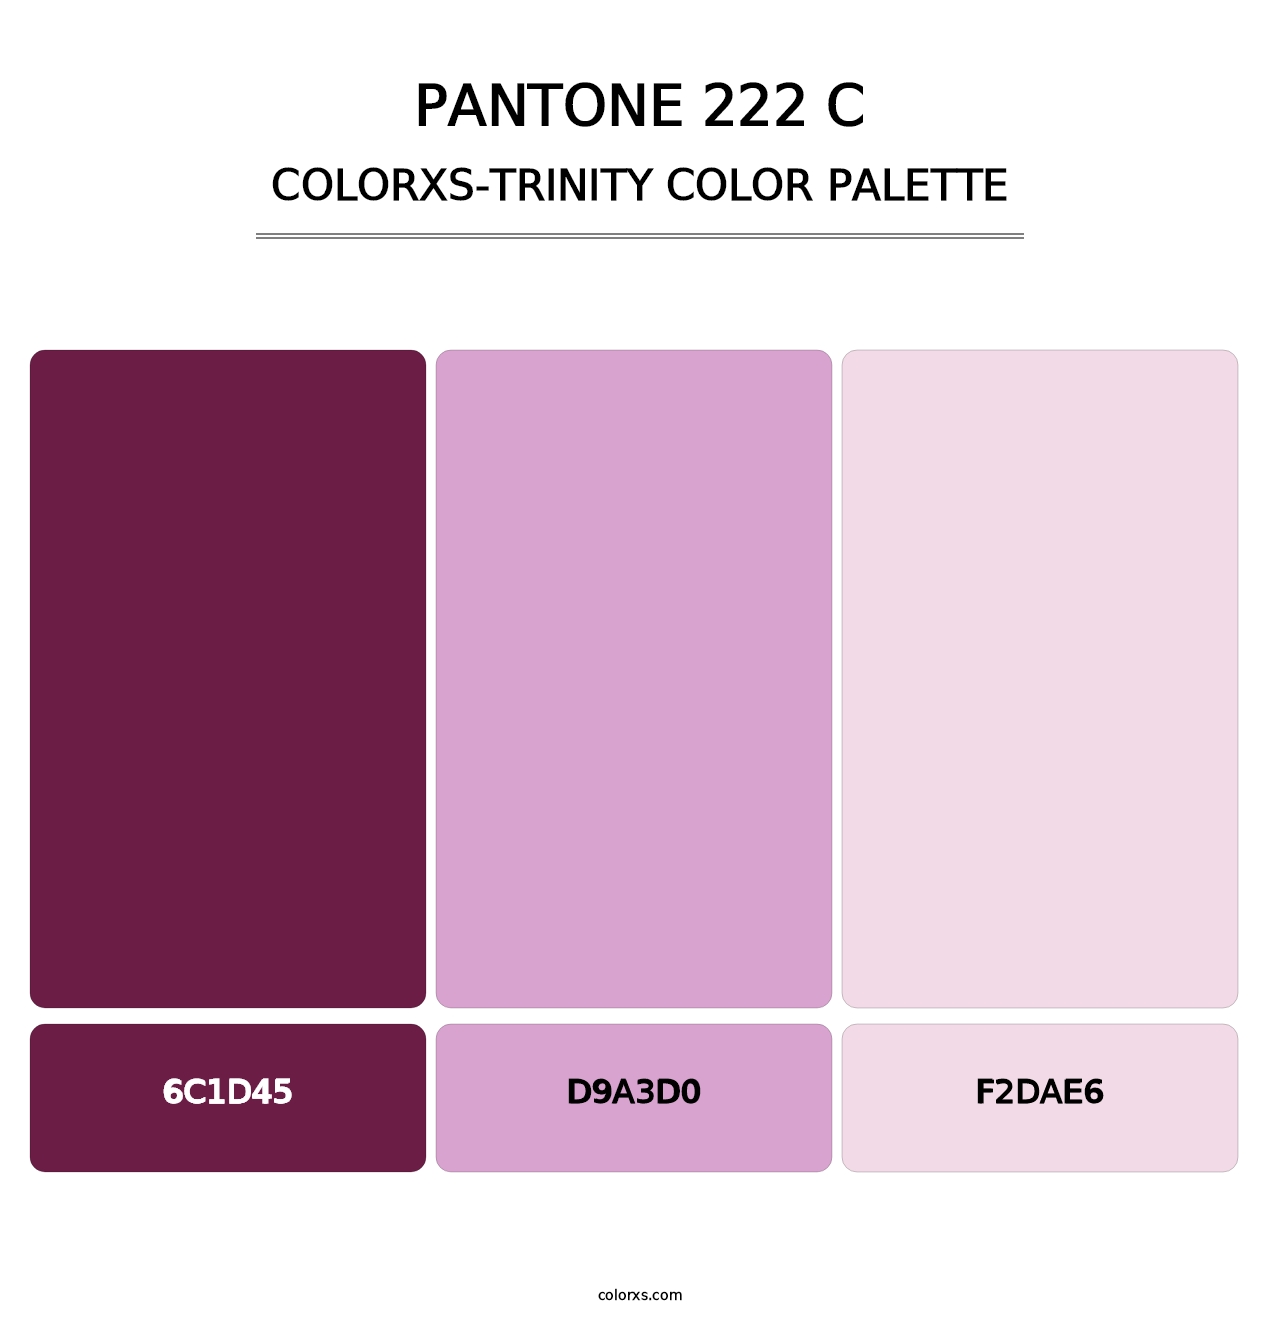 PANTONE 222 C - Colorxs Trinity Palette